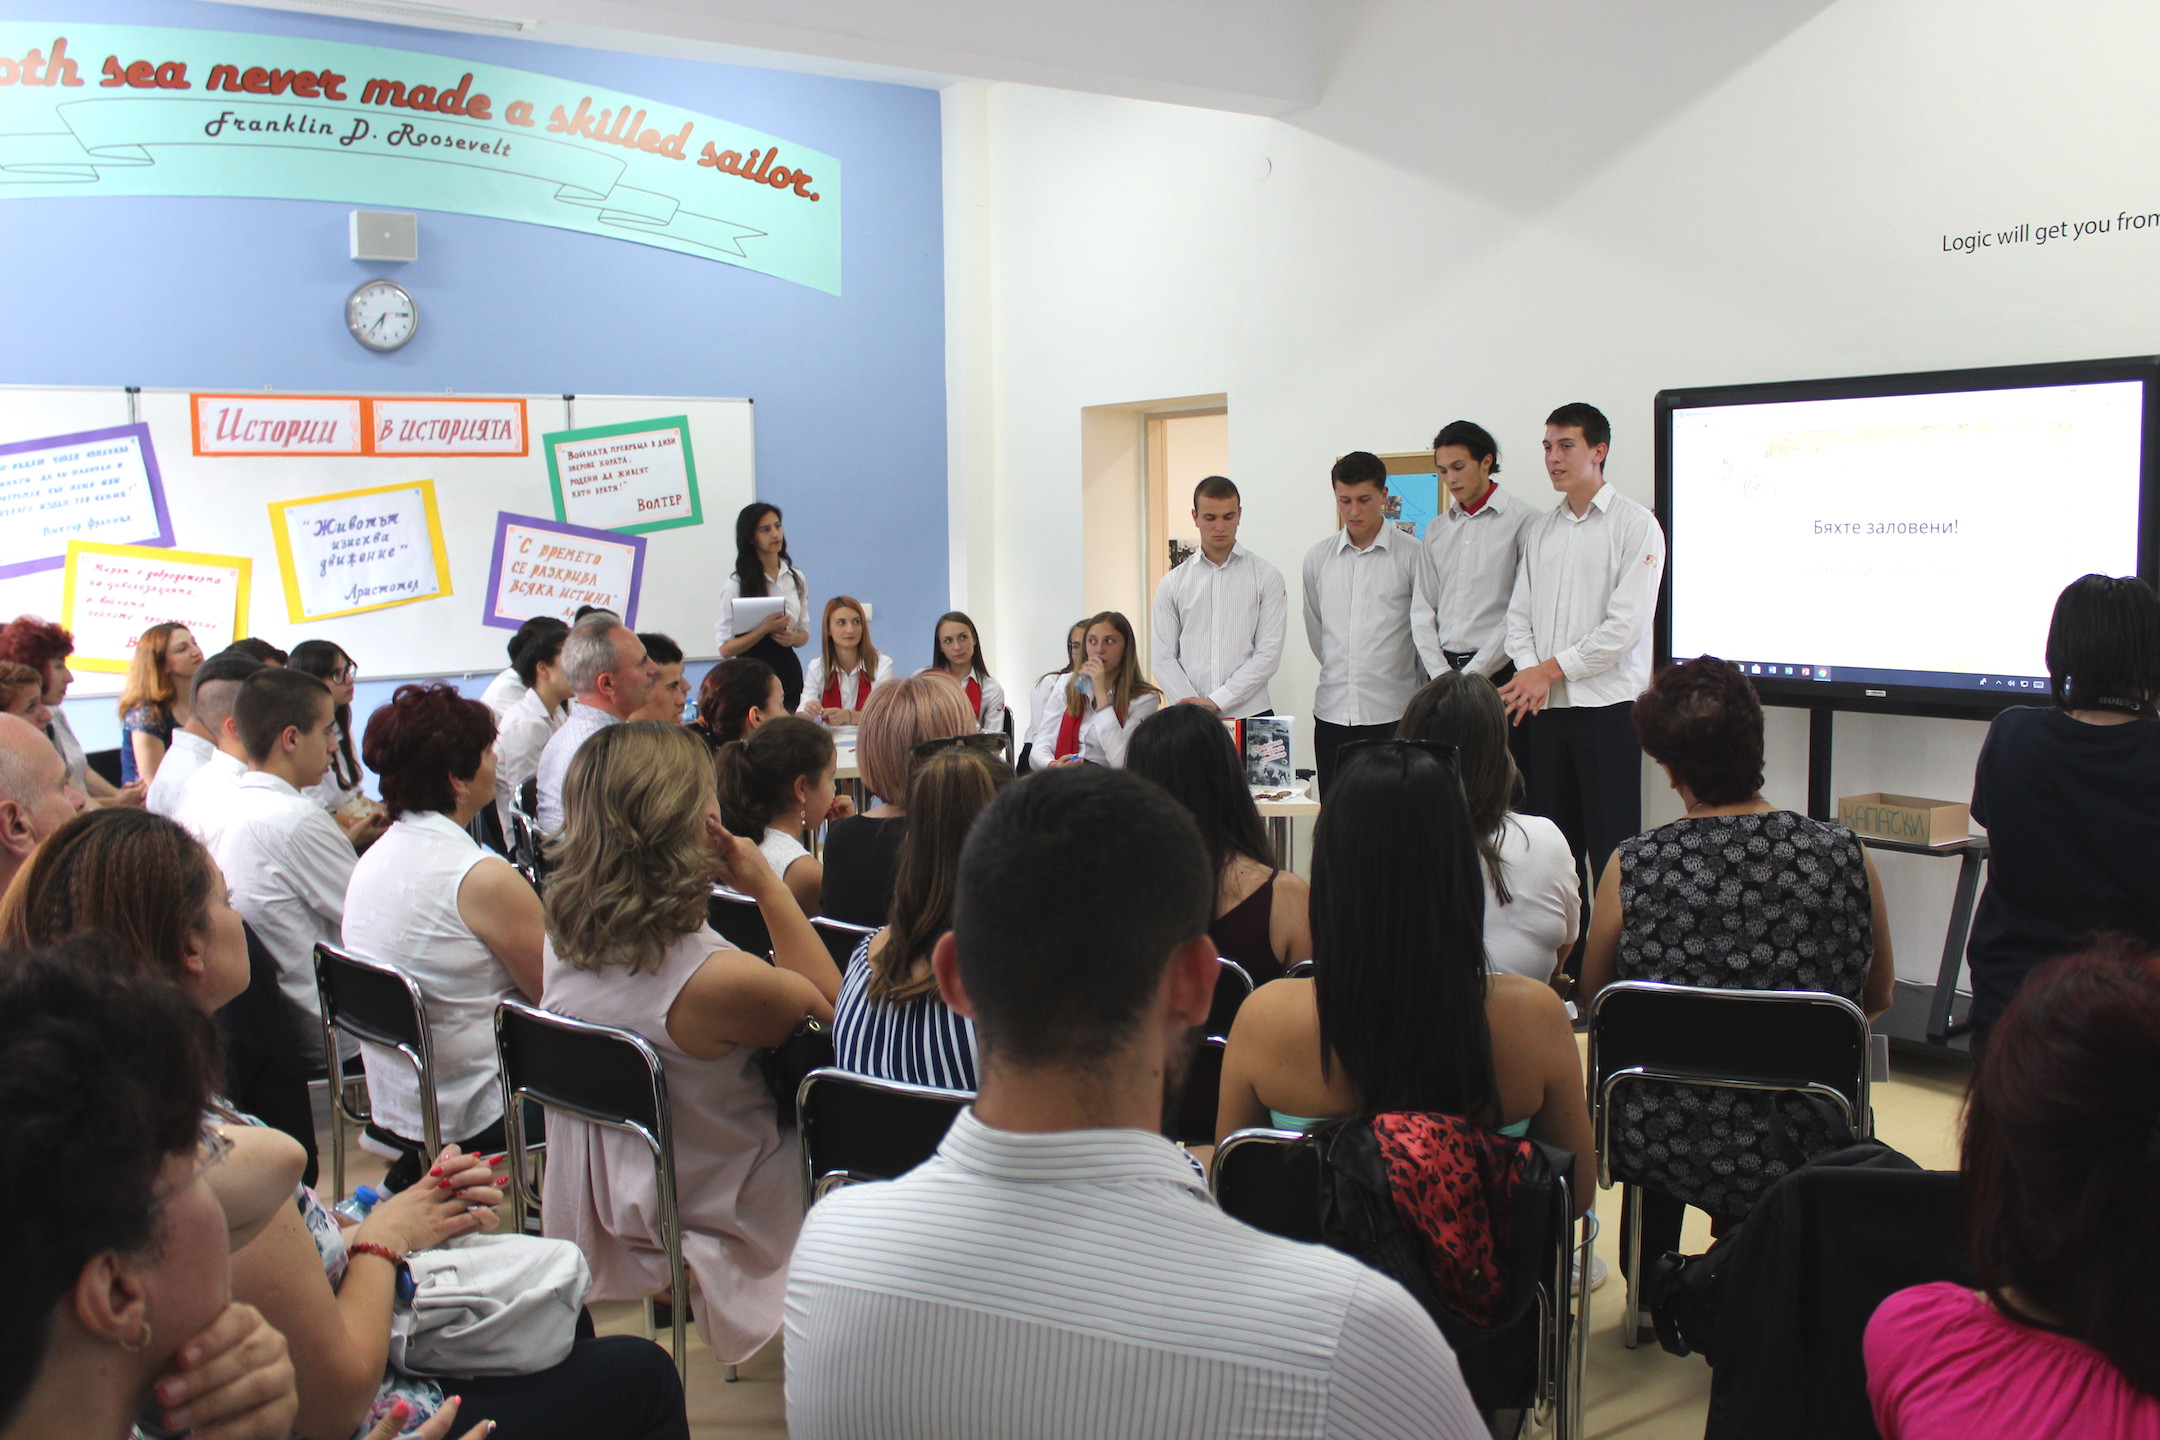 Presenting a school project at the math high school in Gotse Delchev